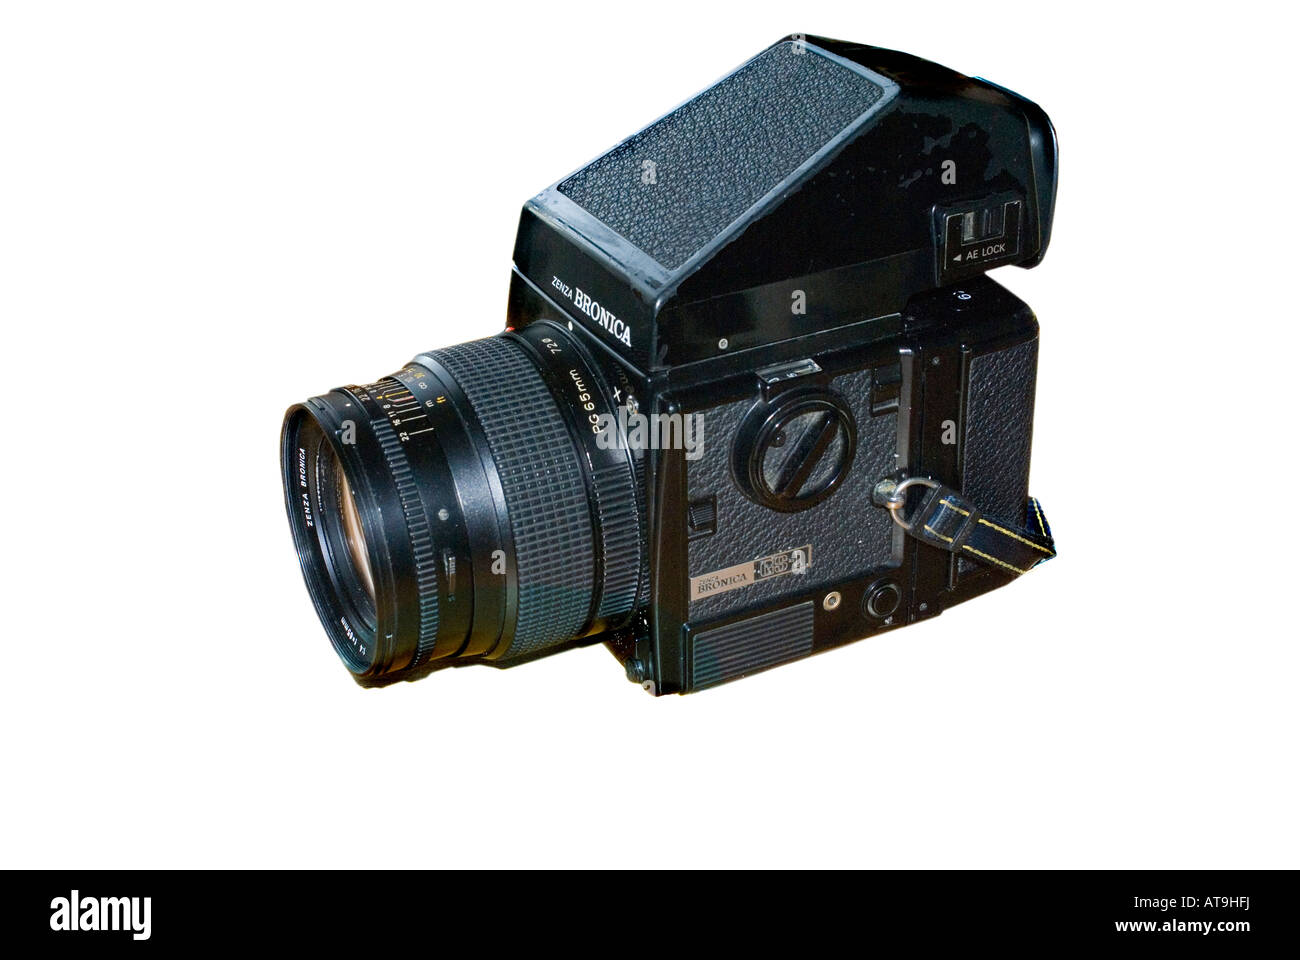 Bronica gs1 appareil photo reflex moyen format Photo Stock - Alamy